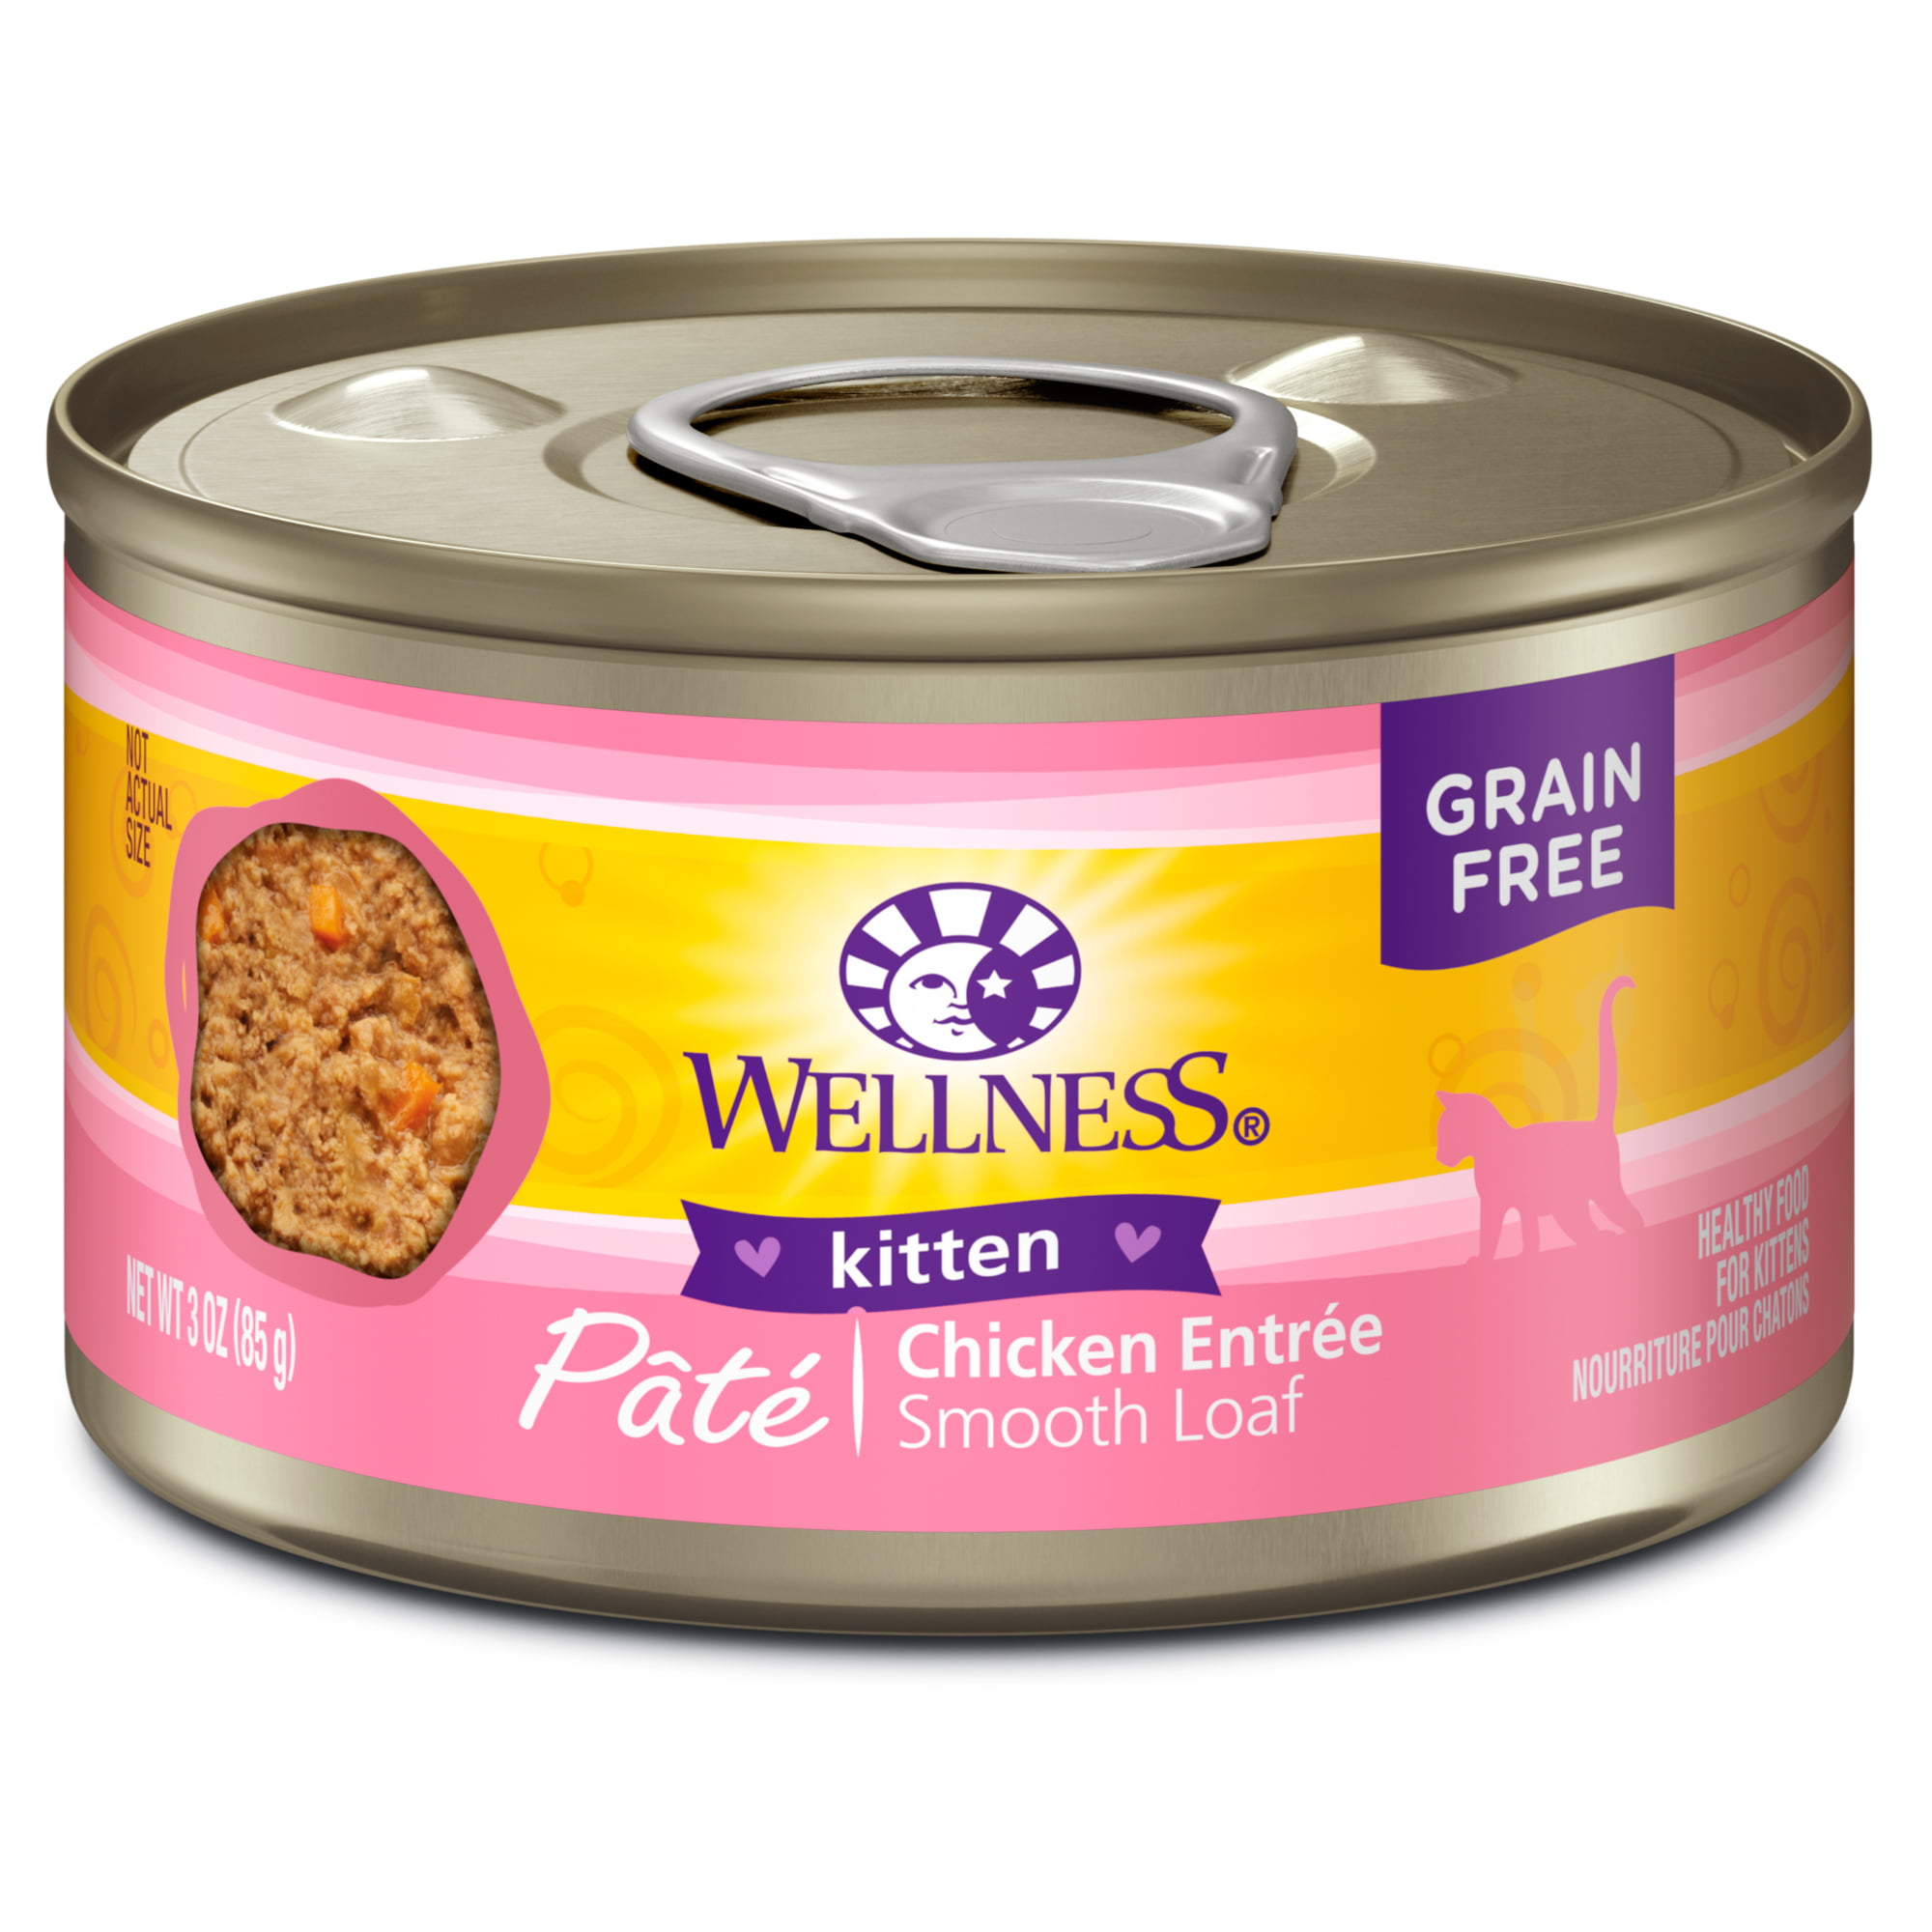 Wellness Complete Health Grain Free Canned Cat Food, Kitten Formula, 3